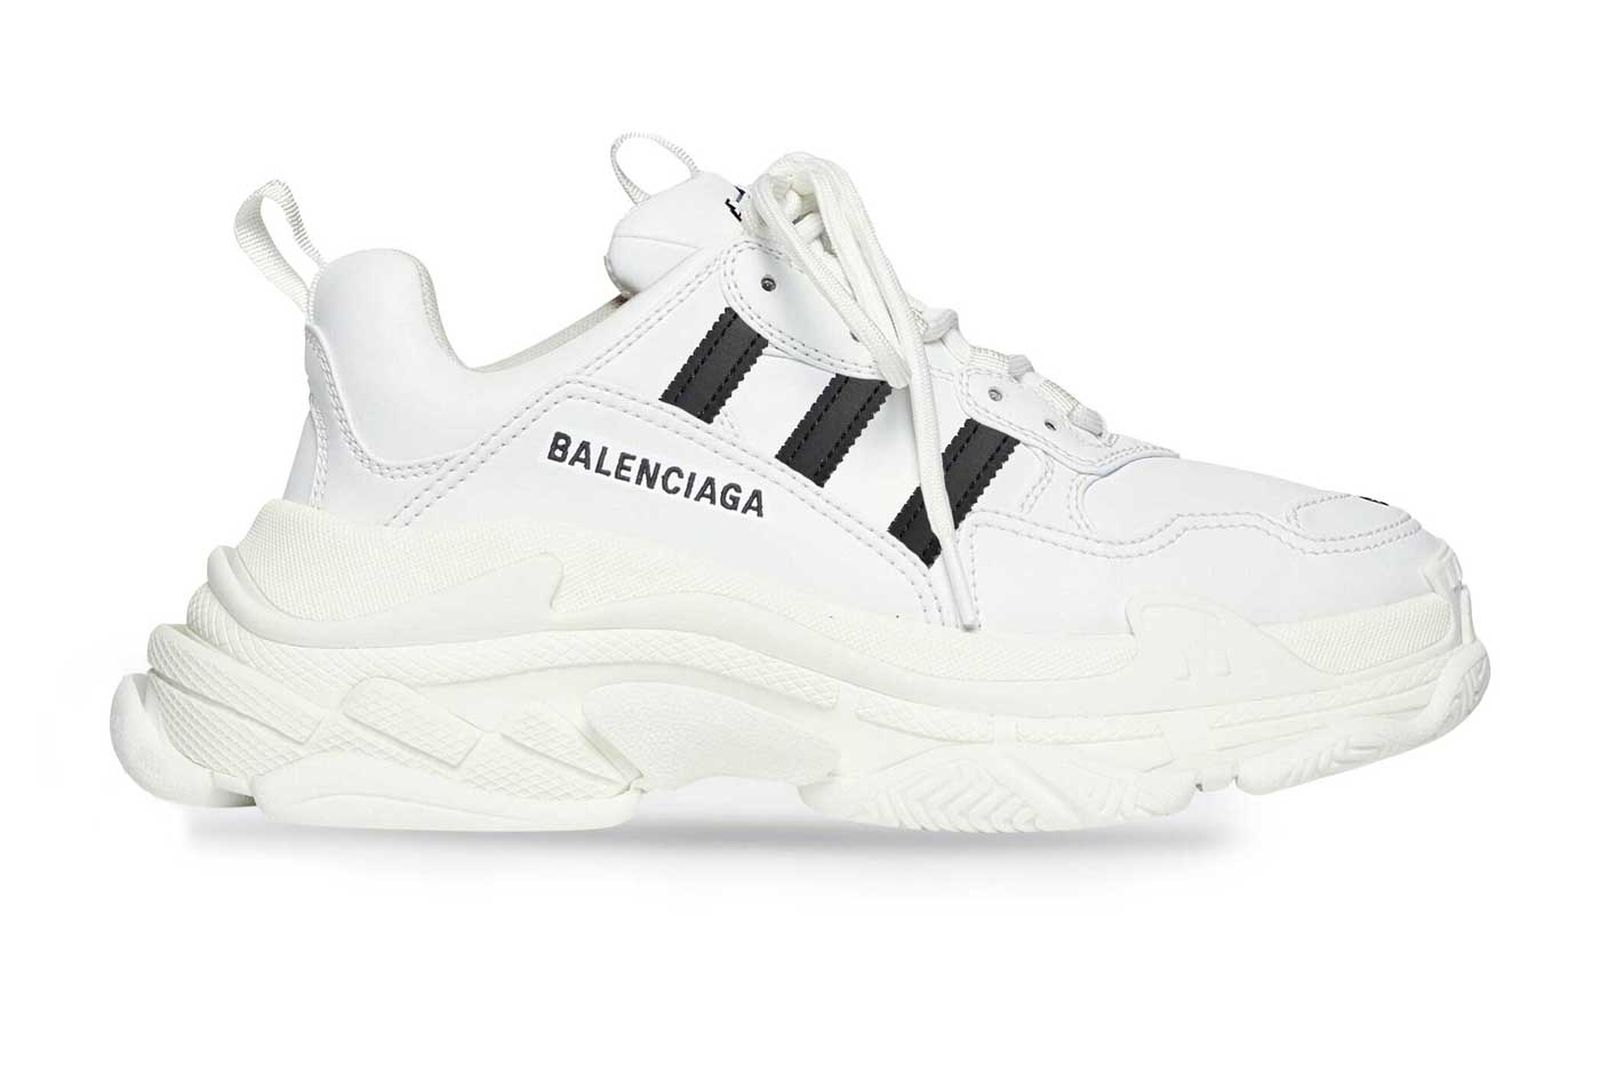 x Balenciaga Triple S First Look, Sneaker Leak